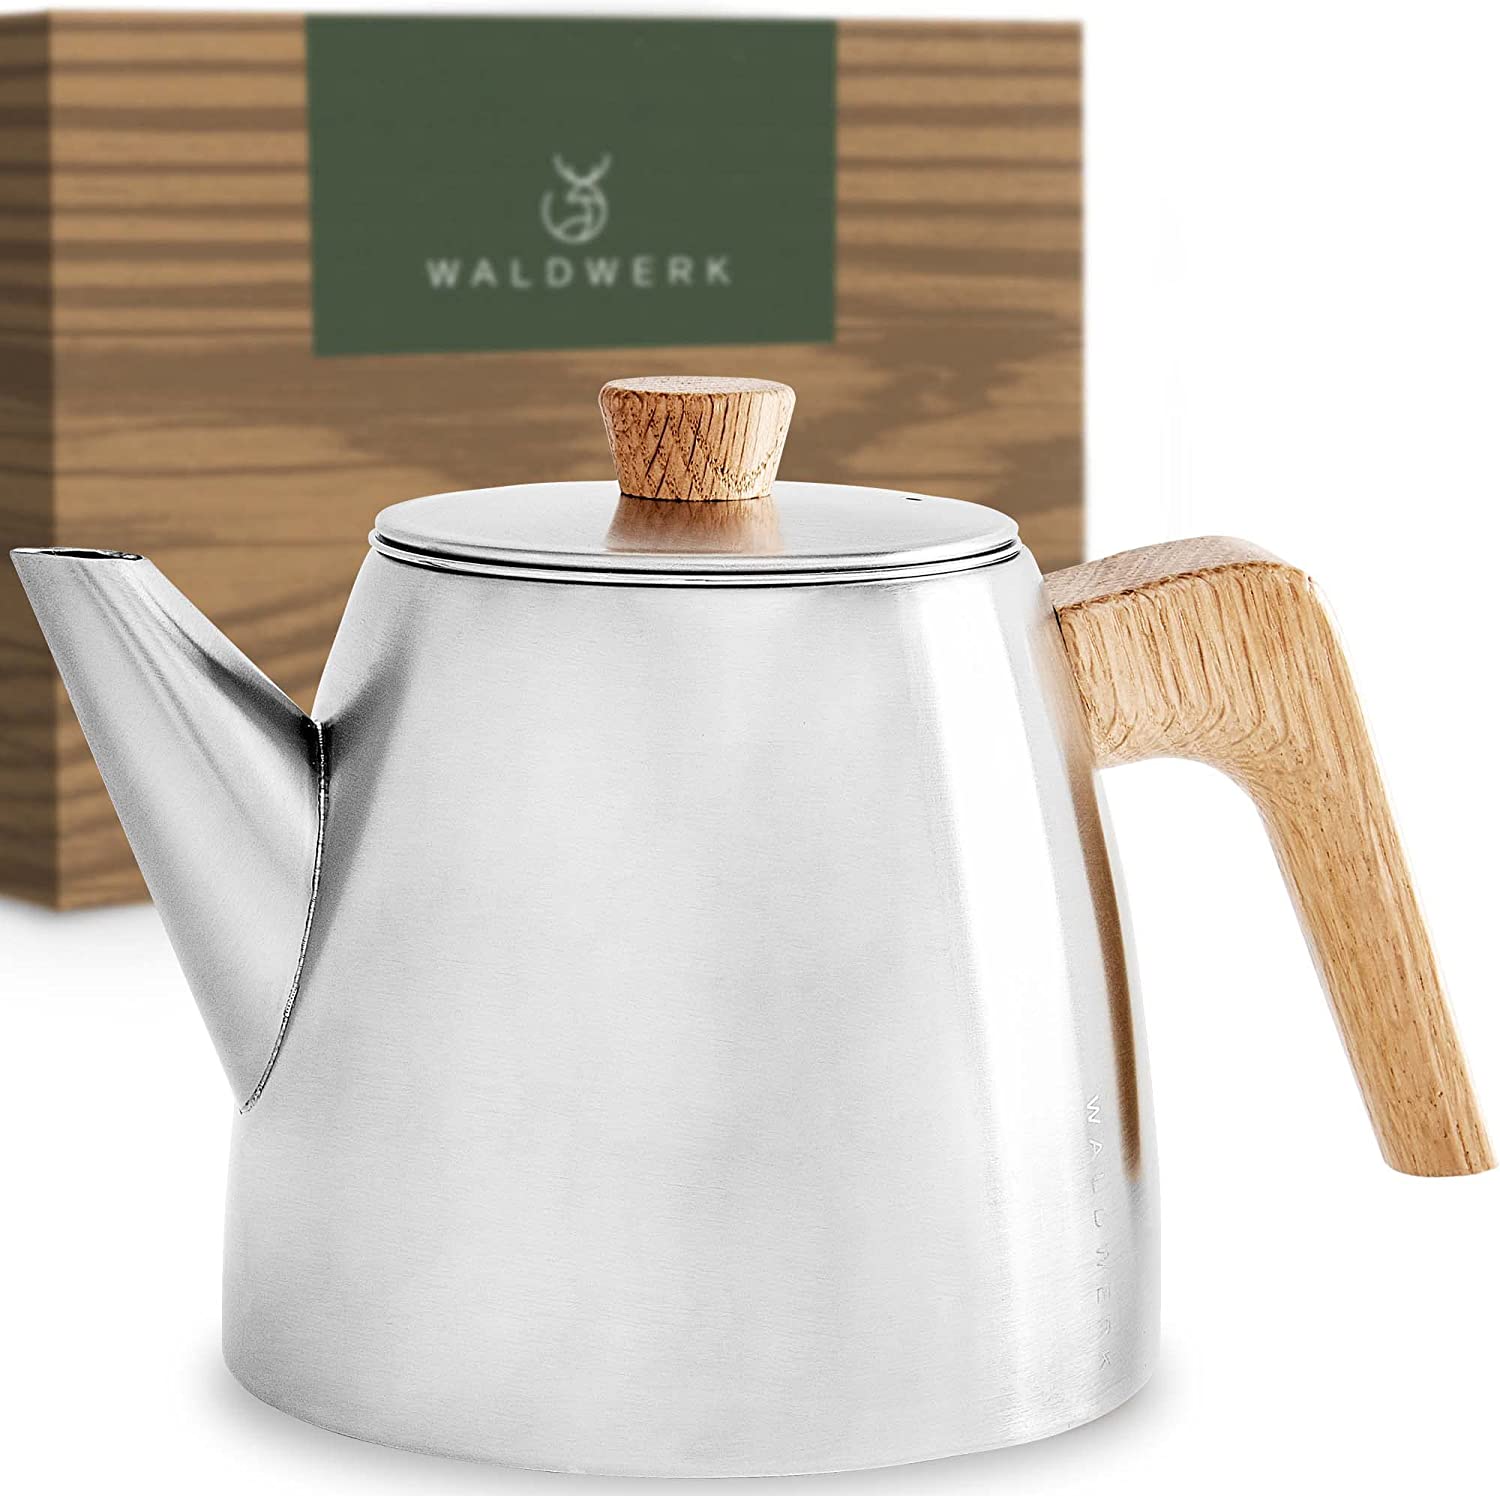 WALDWERK Teapot with Strainer Insert, Thermal Double-Walled Teapot with Strainer Made of 304 Stainless Steel, Tea Maker with Real Oak Wood Handles, Tea Pot 100% Drip-Free